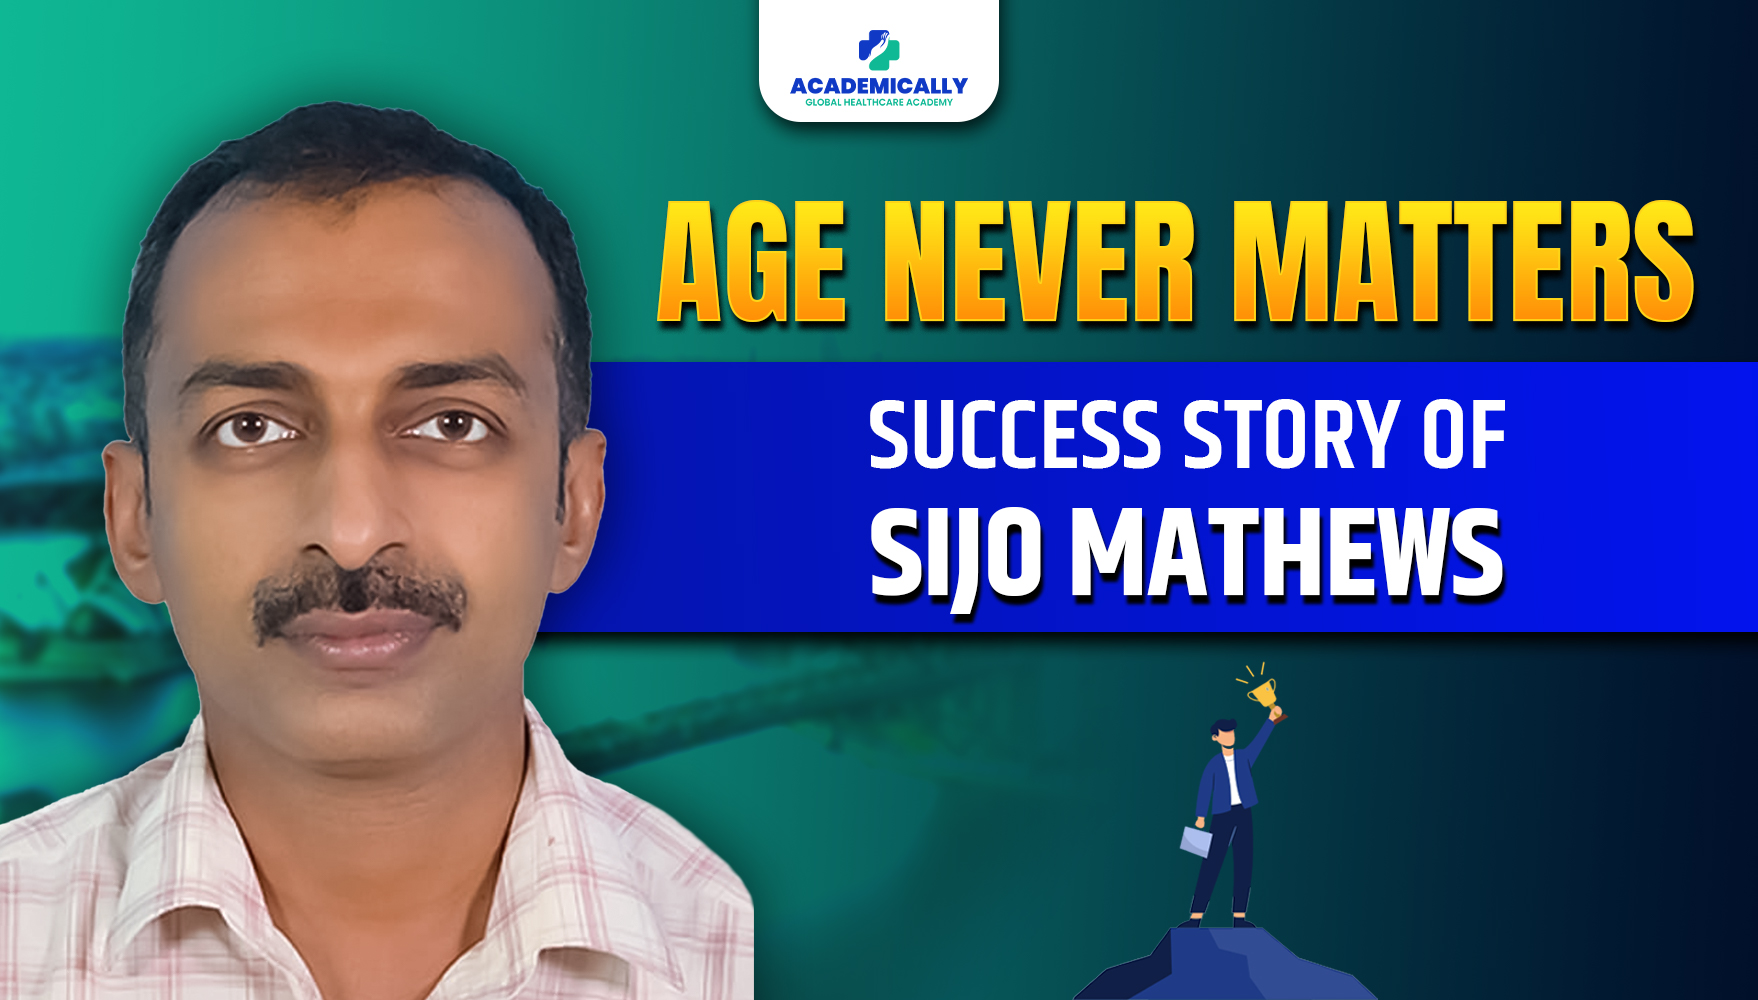 Success Story of Sijo Mathews